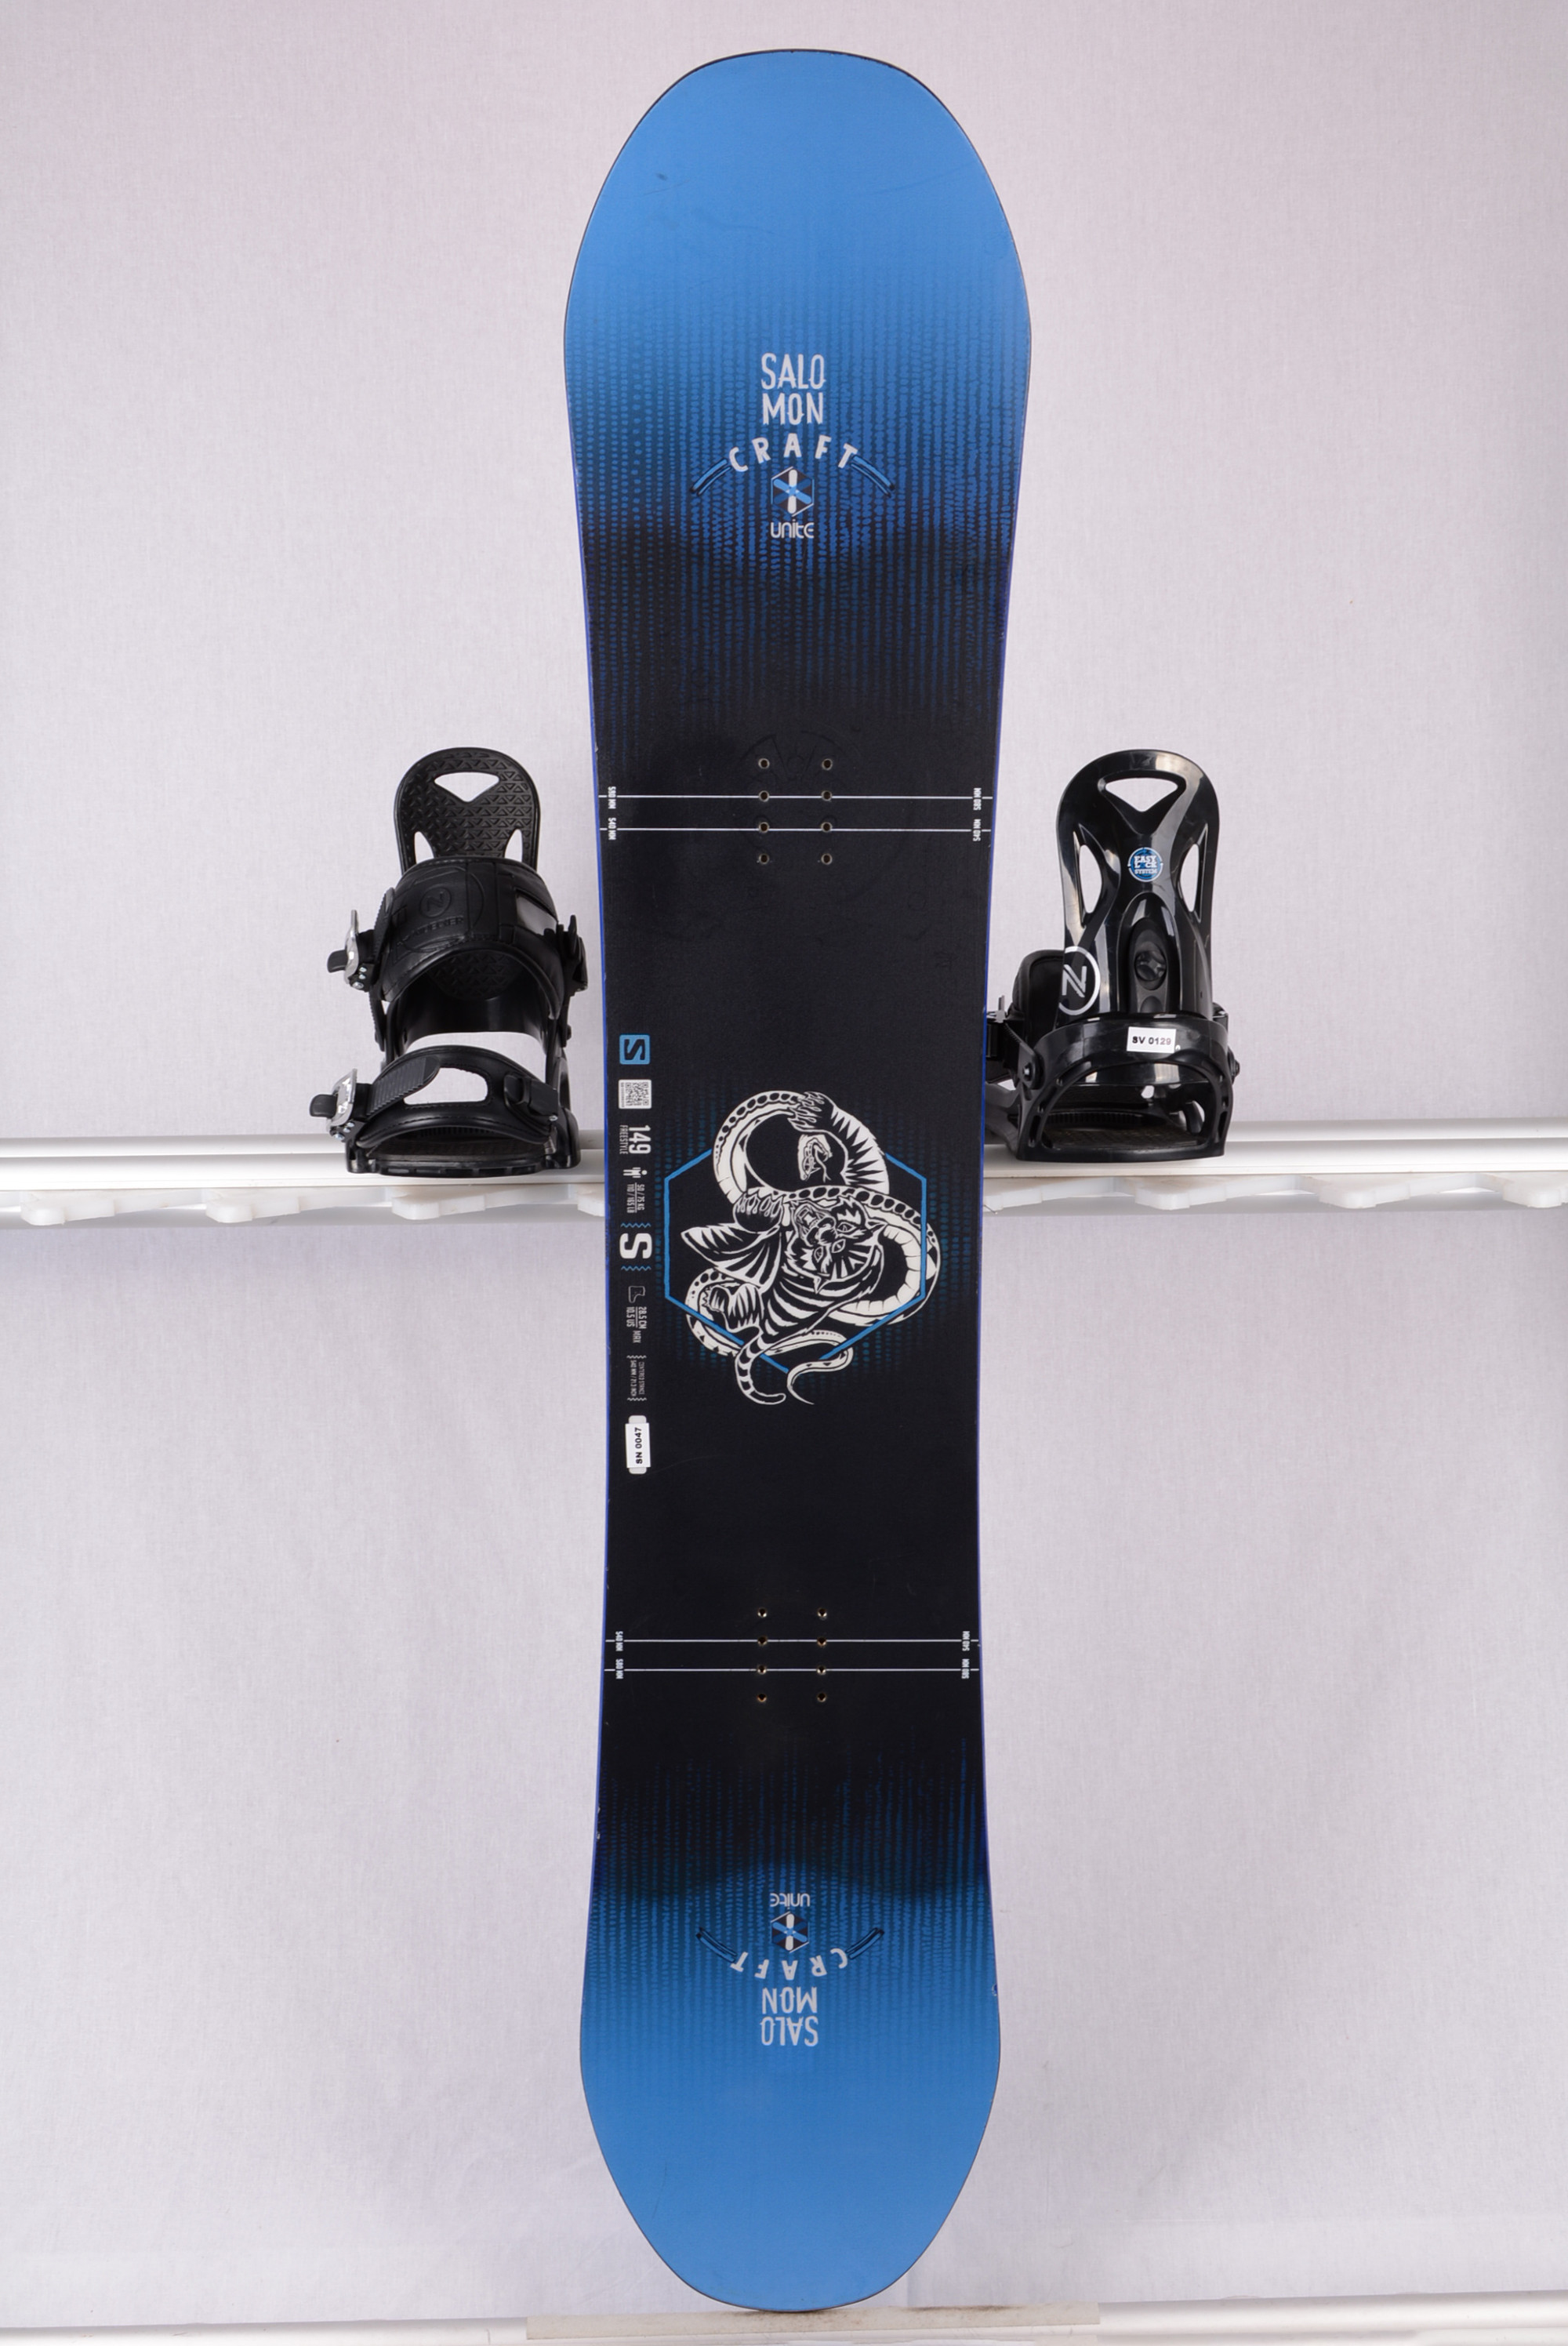 Herkenning Normaal gesproken Amfibisch snowboard SALOMON CRAFT UNITE 2019, black/blue, freestyle, woodcore,  sidecut, FLAT/camber - Mardosport.com